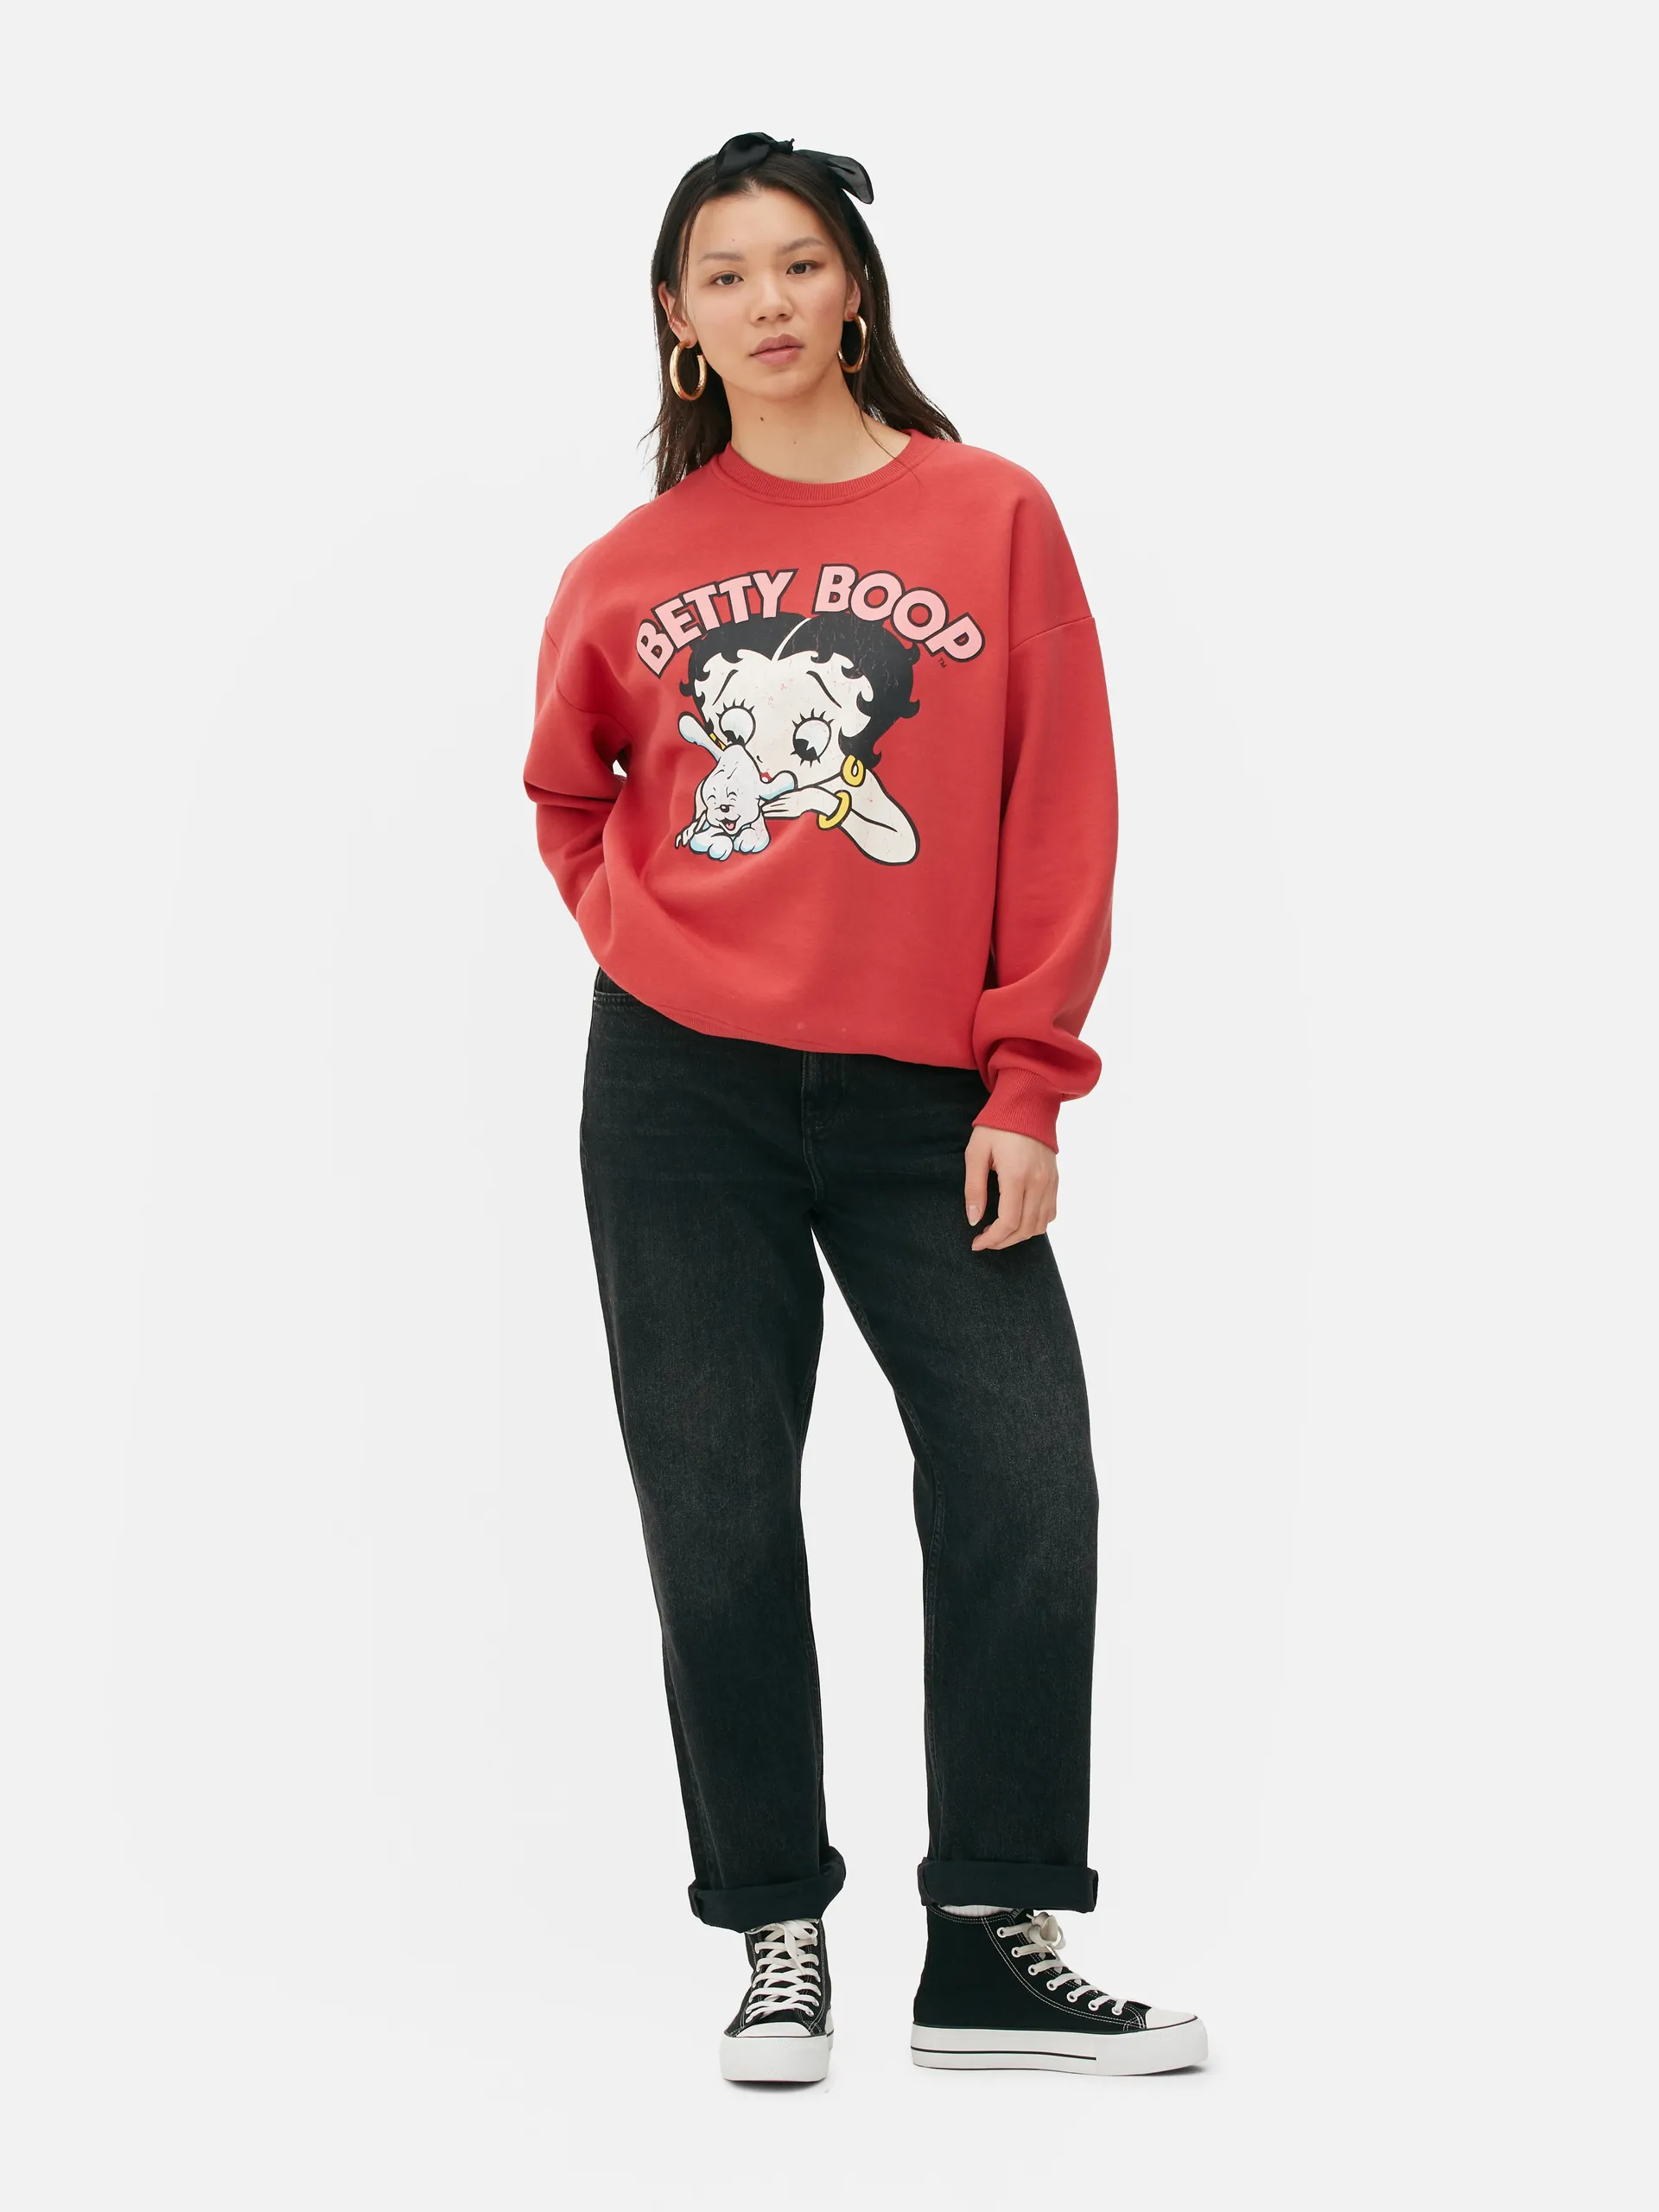 „Betty Boop“ Sweatshirt im Oversized-Look mit Grafik